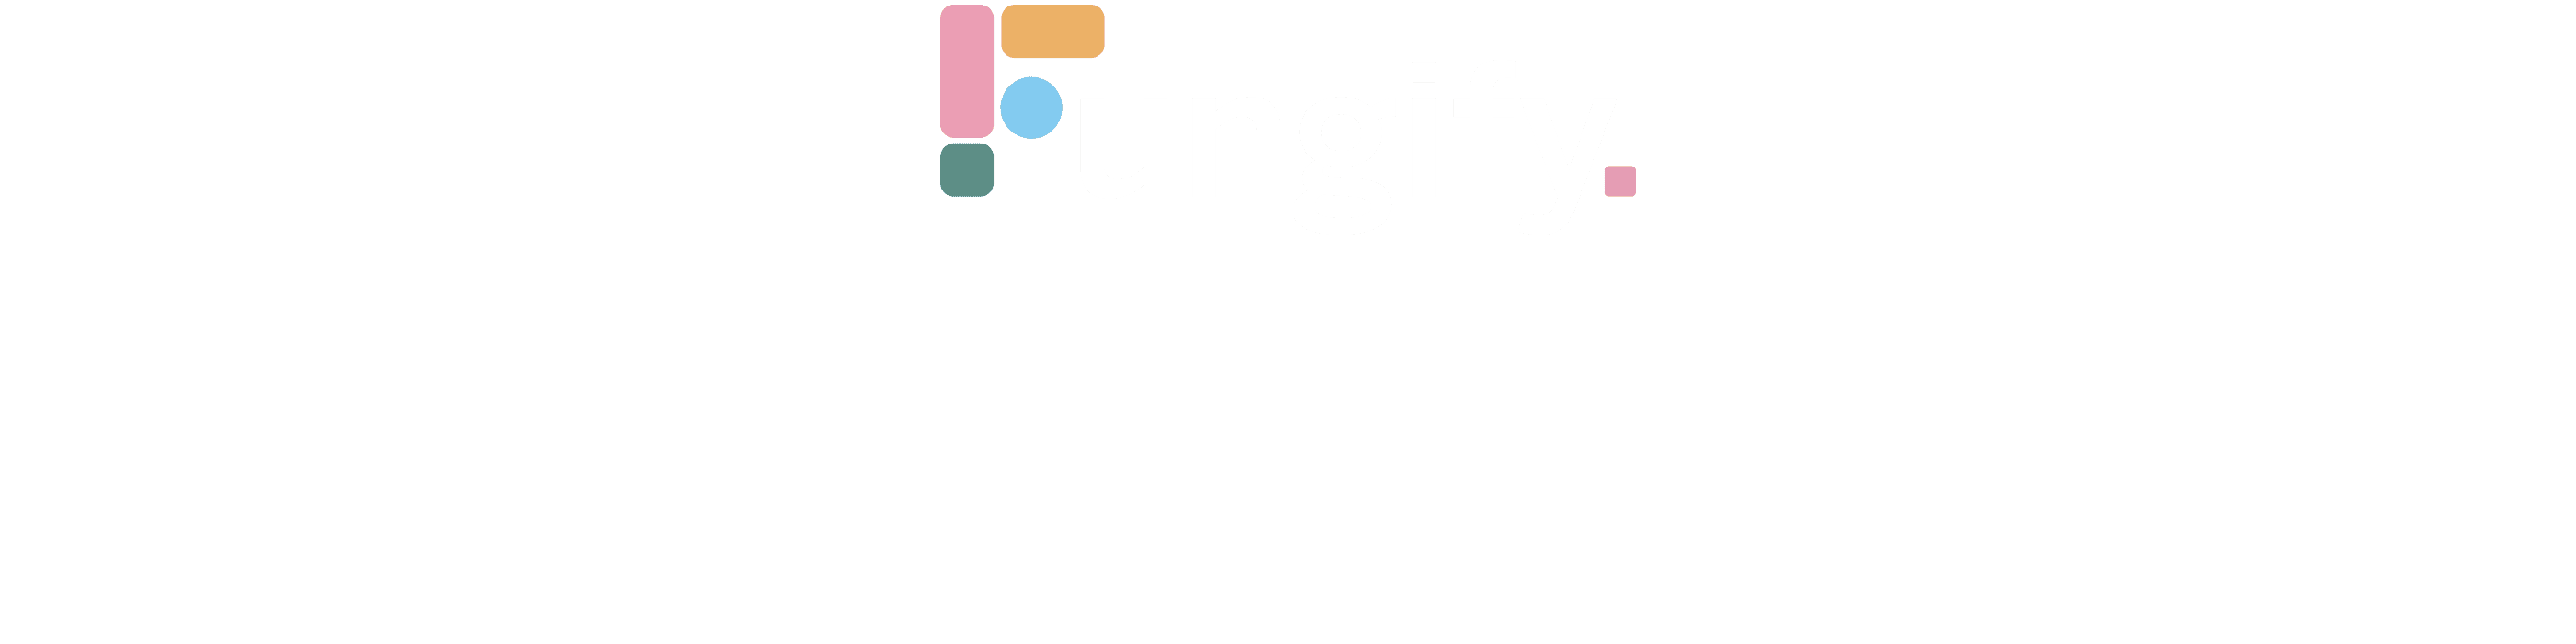 FungifyNFT banner